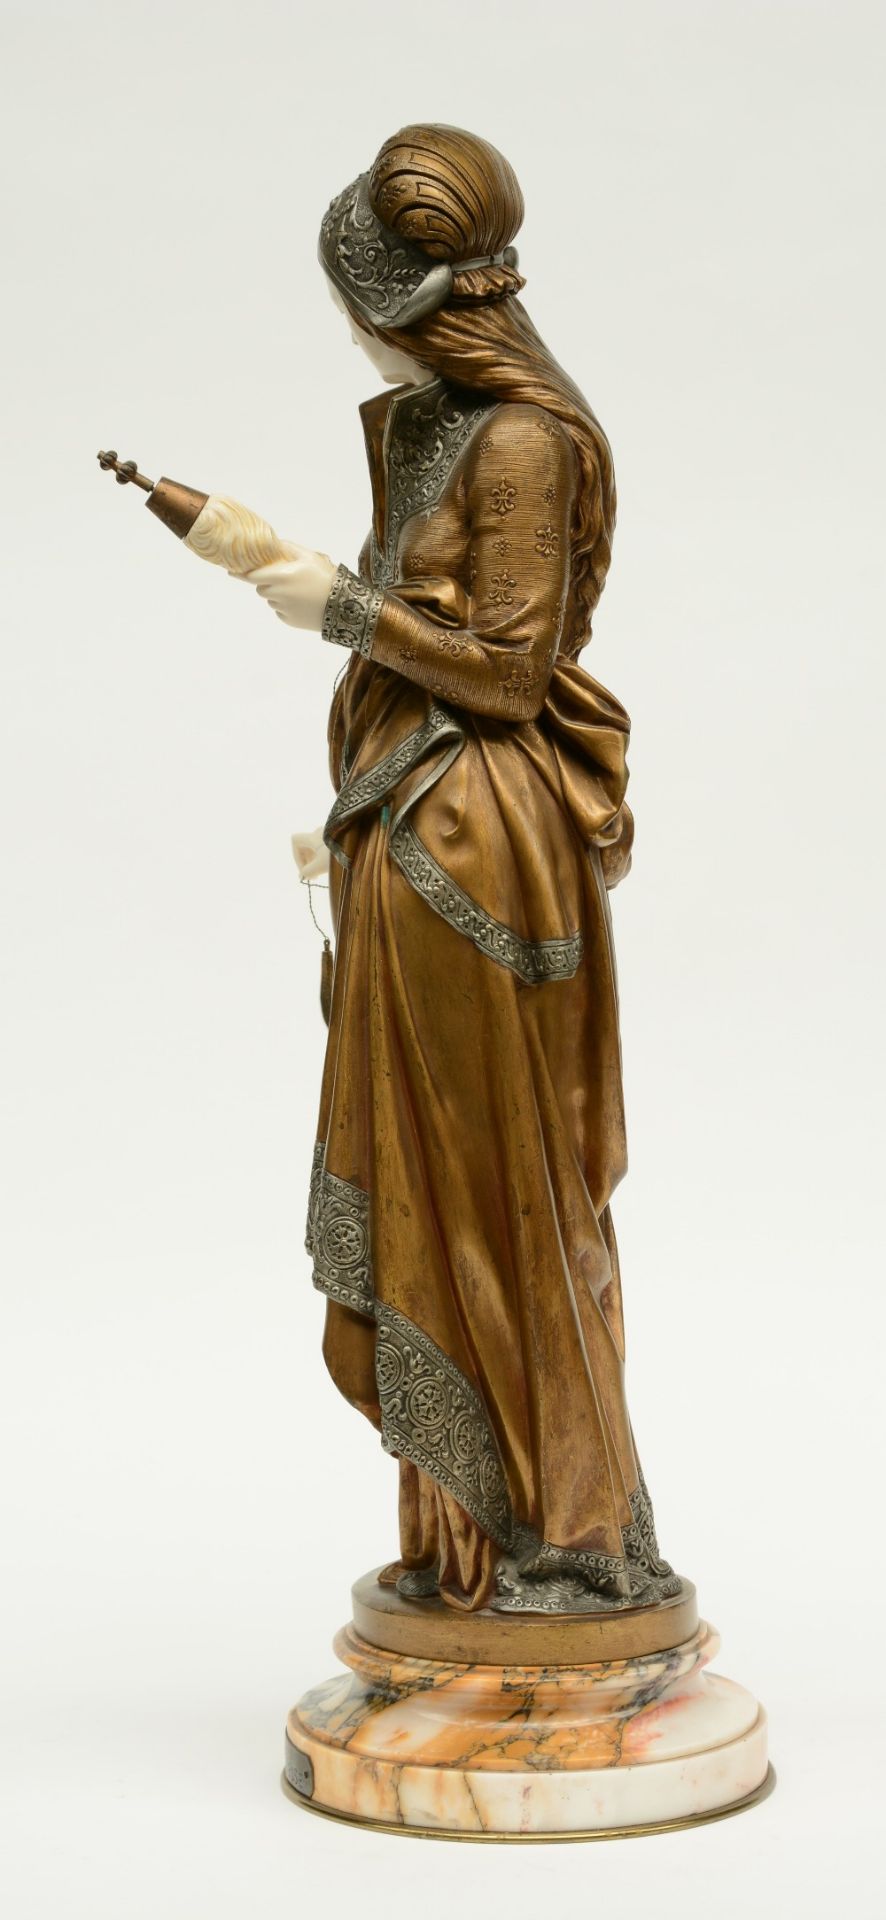 Carrier - Belleuse A., 'La Fileuse', chryselephantine statue, multiple patina, H 75,5 cm - Image 2 of 15